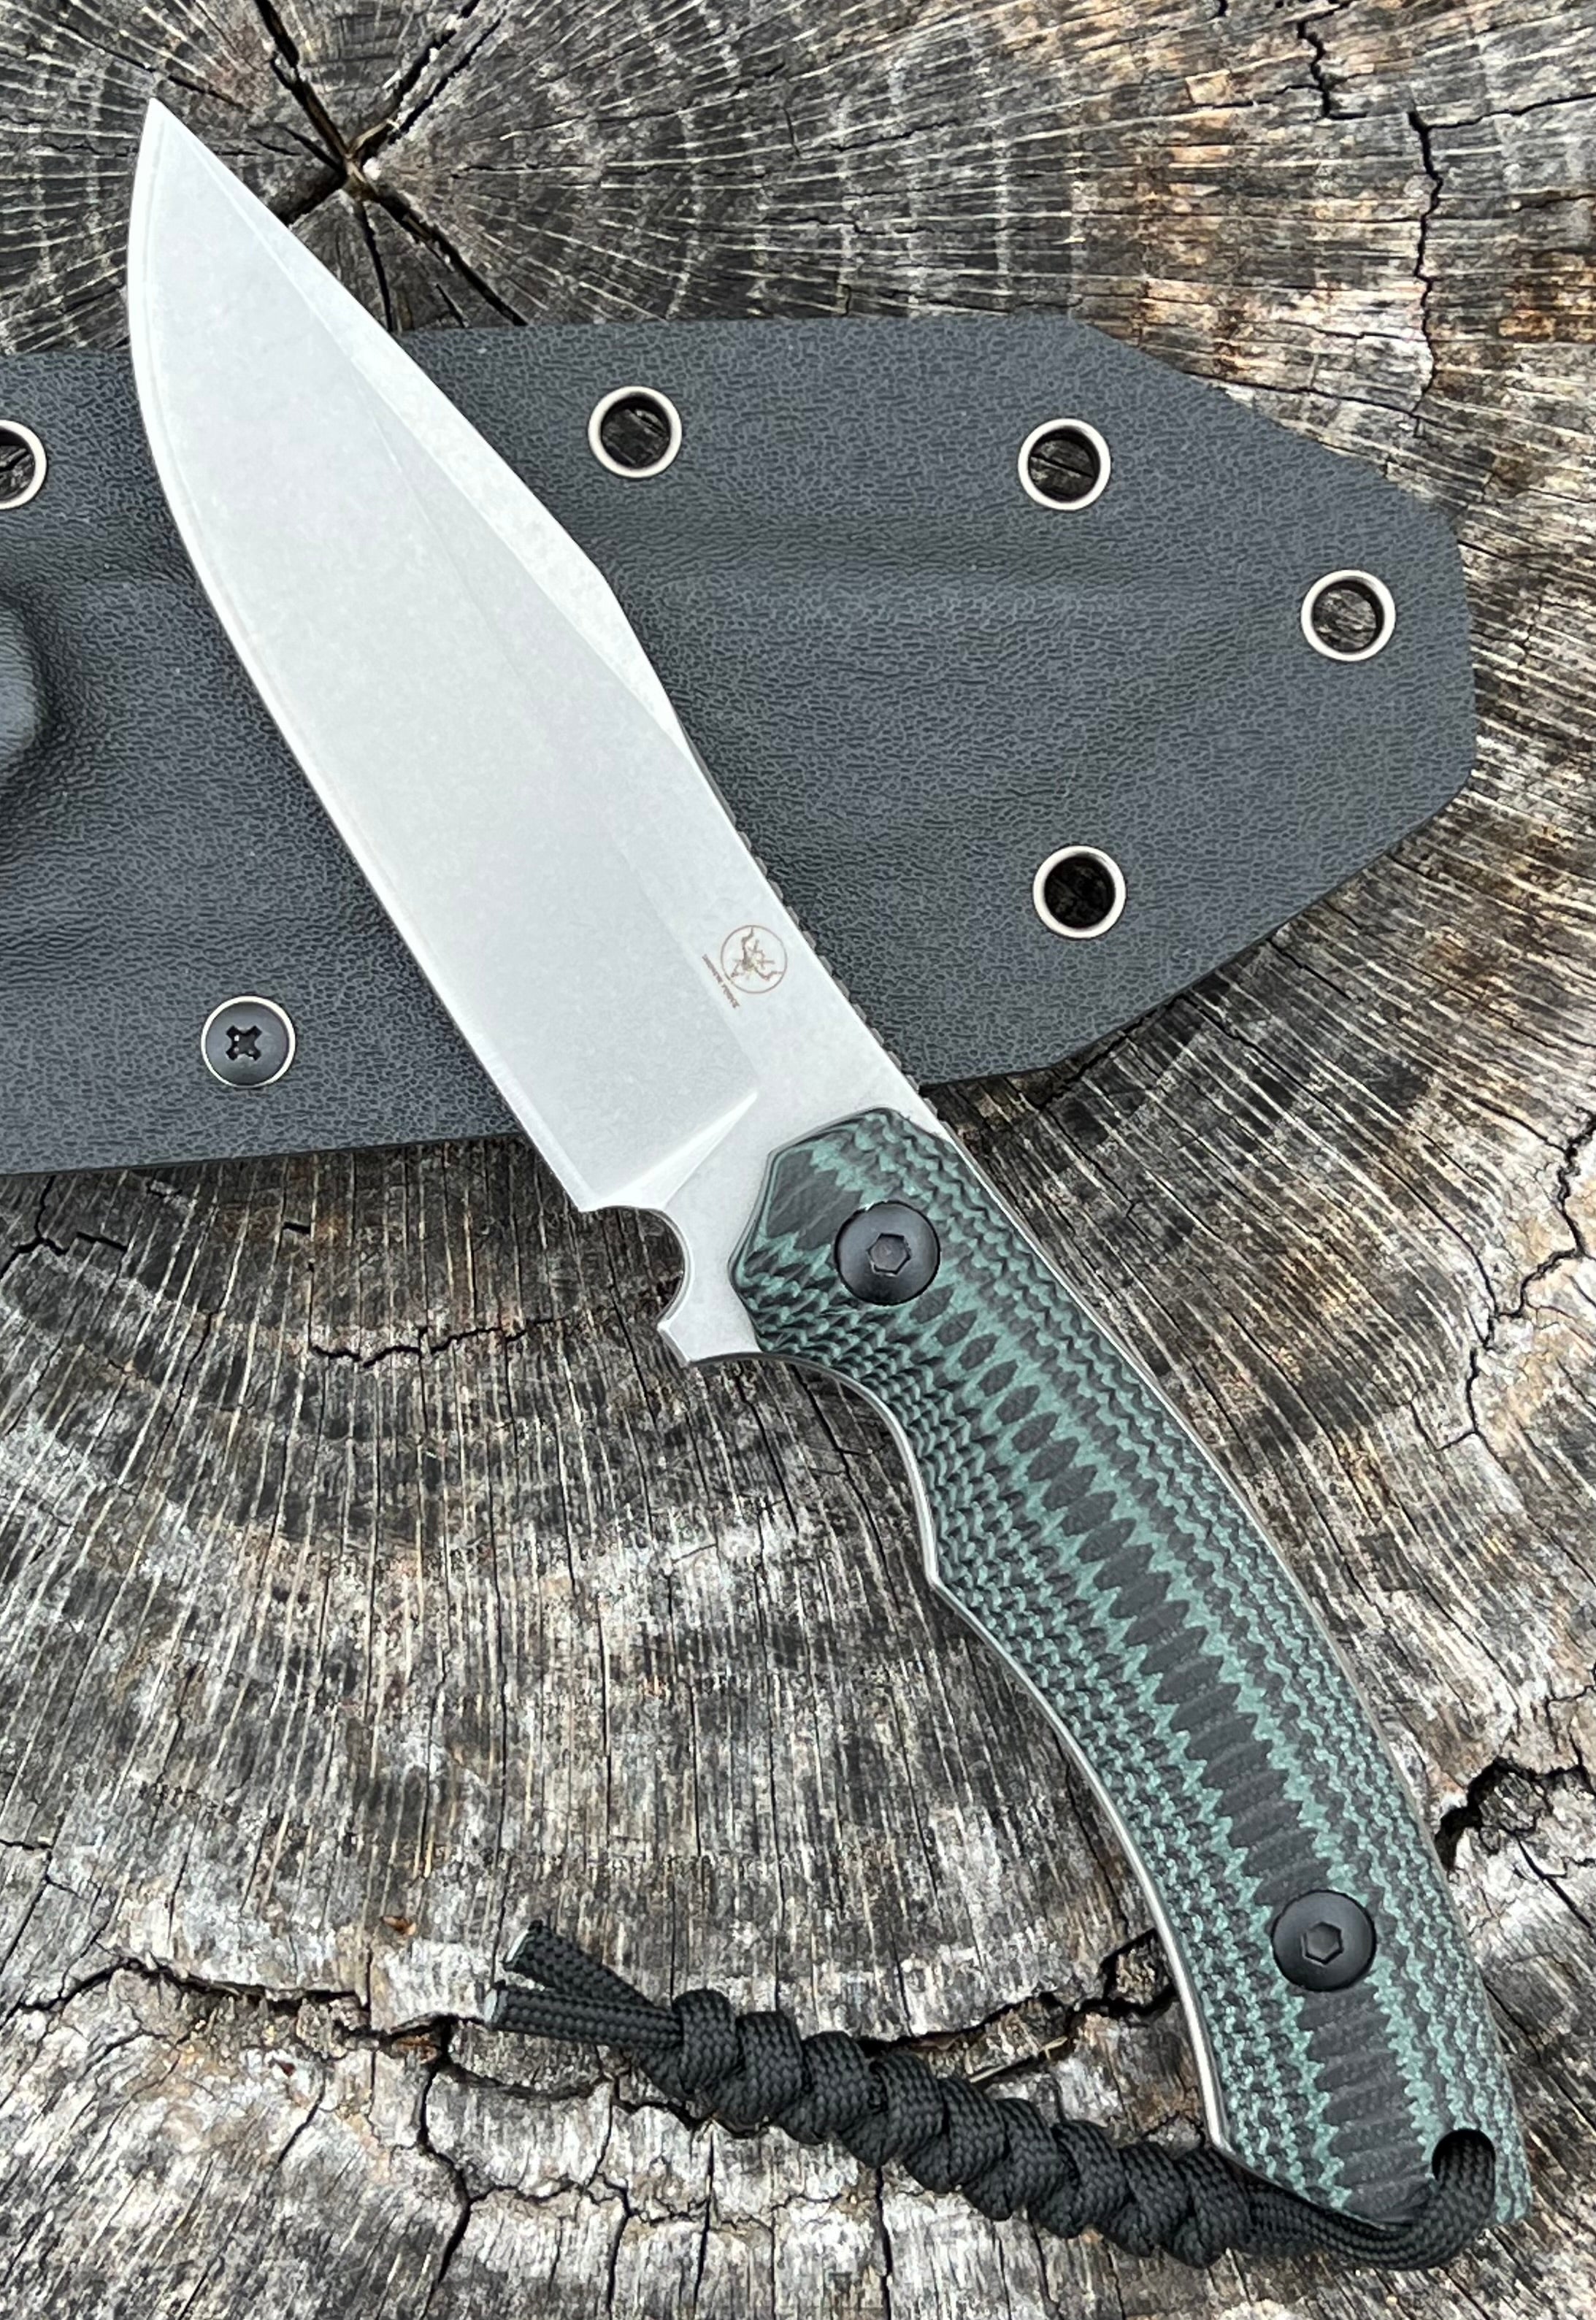 Attleboro Knife Tactical Fixed Blade, Black Sheath- Free Shipping